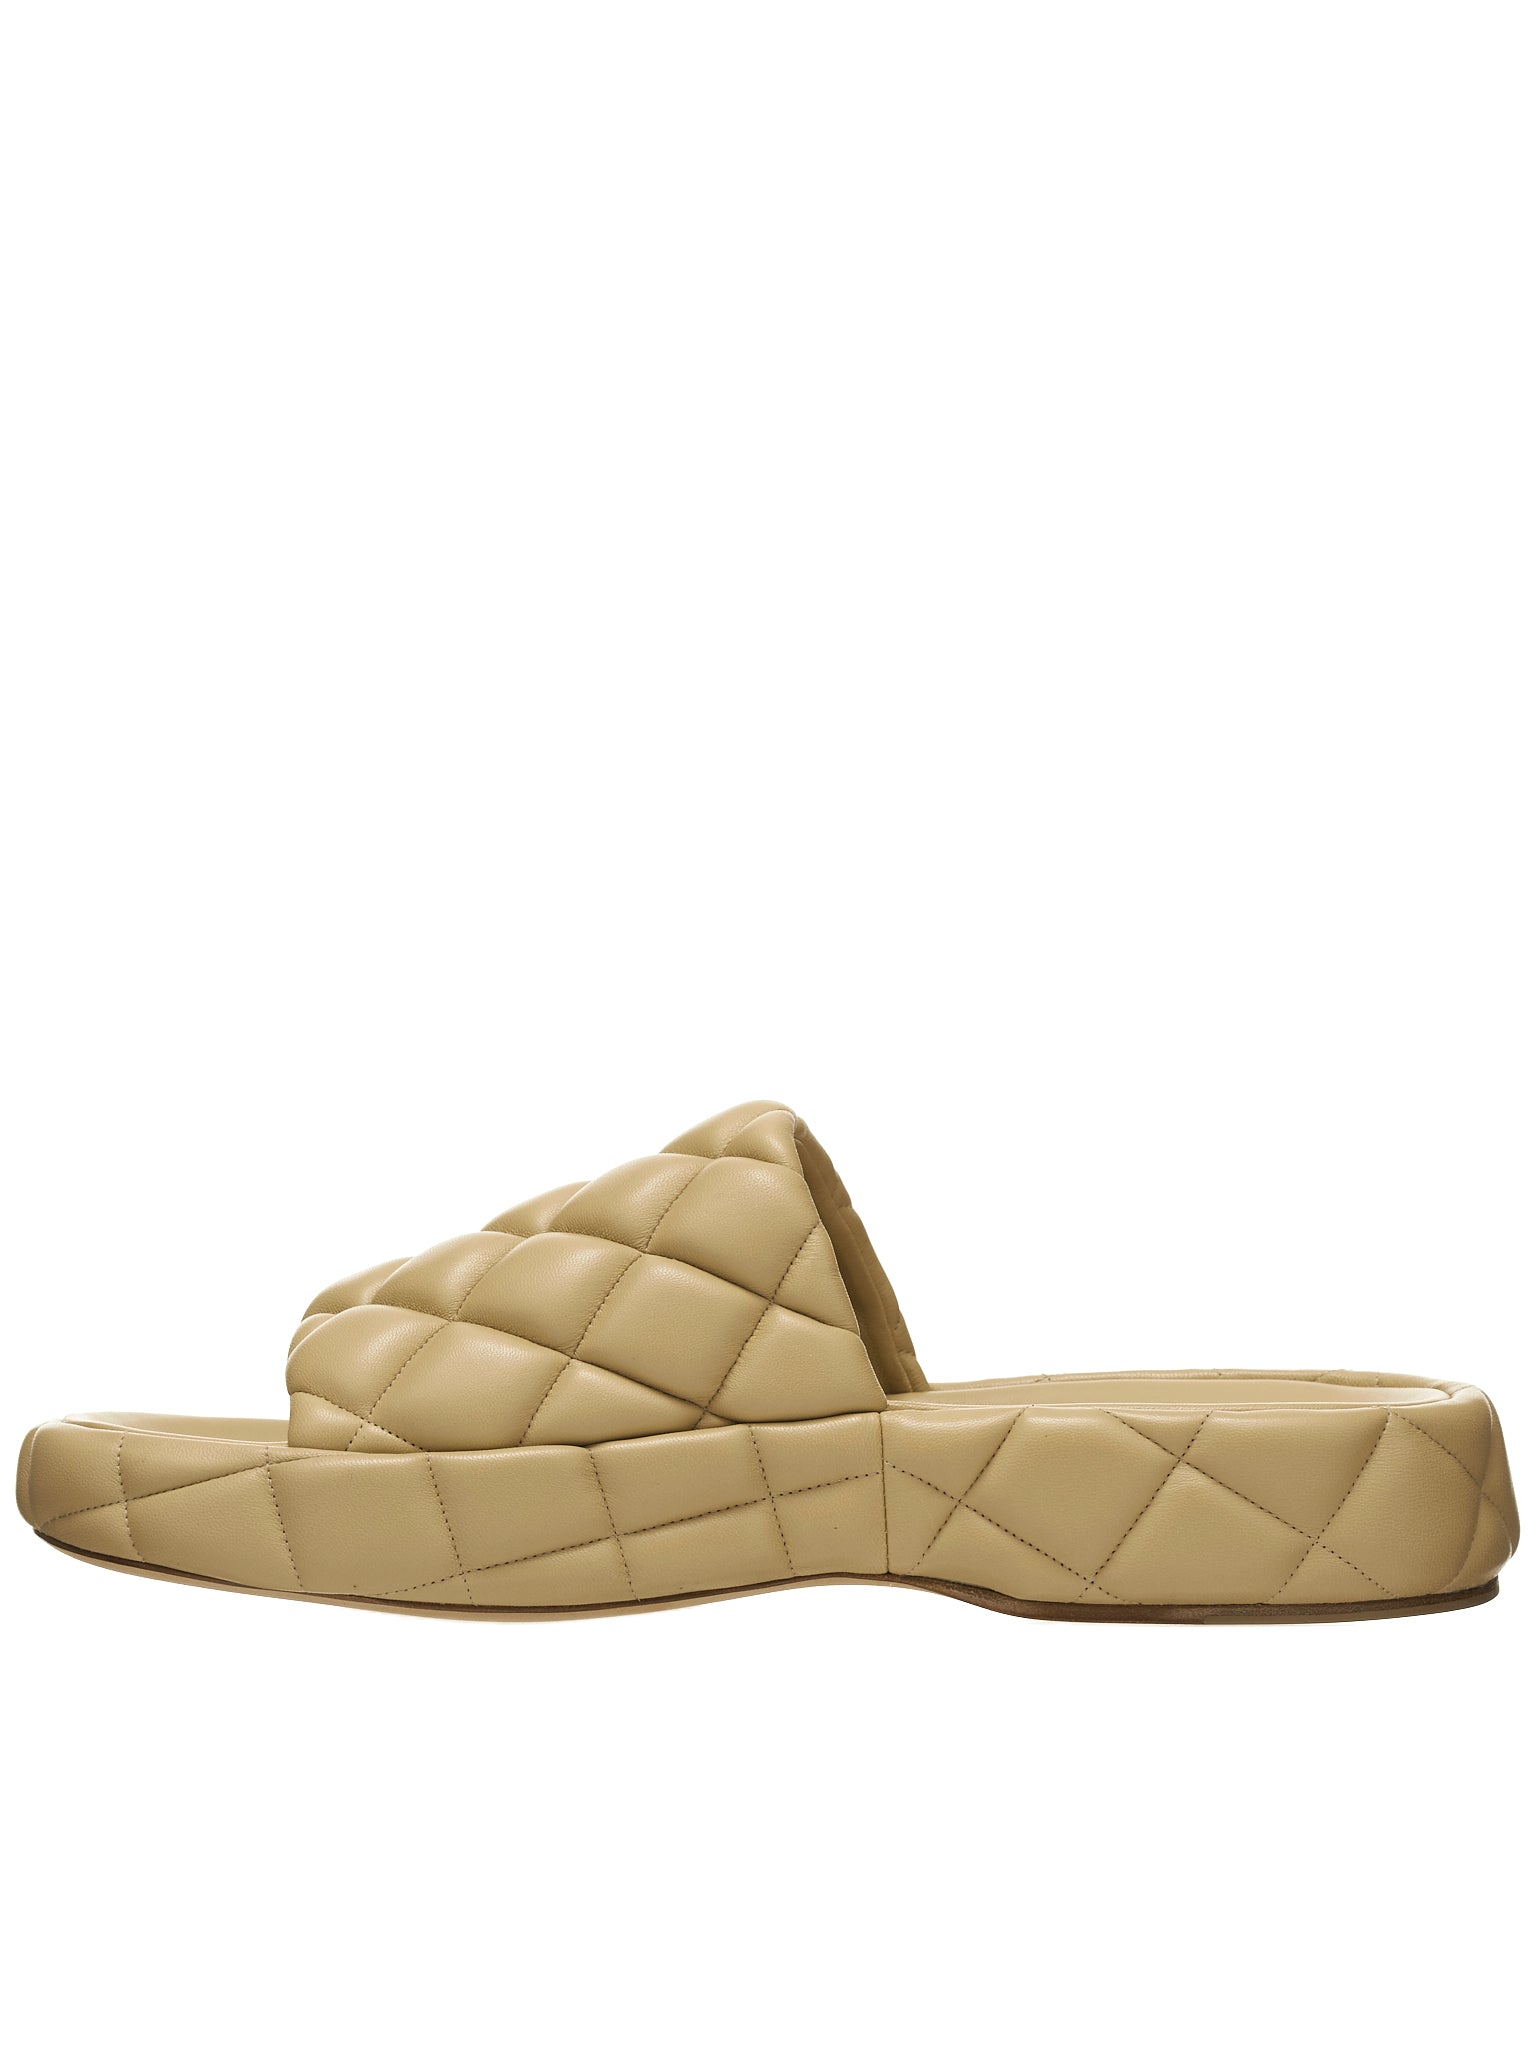 Bottega Veneta Padded Sandals | H. Lorenzo - side 2